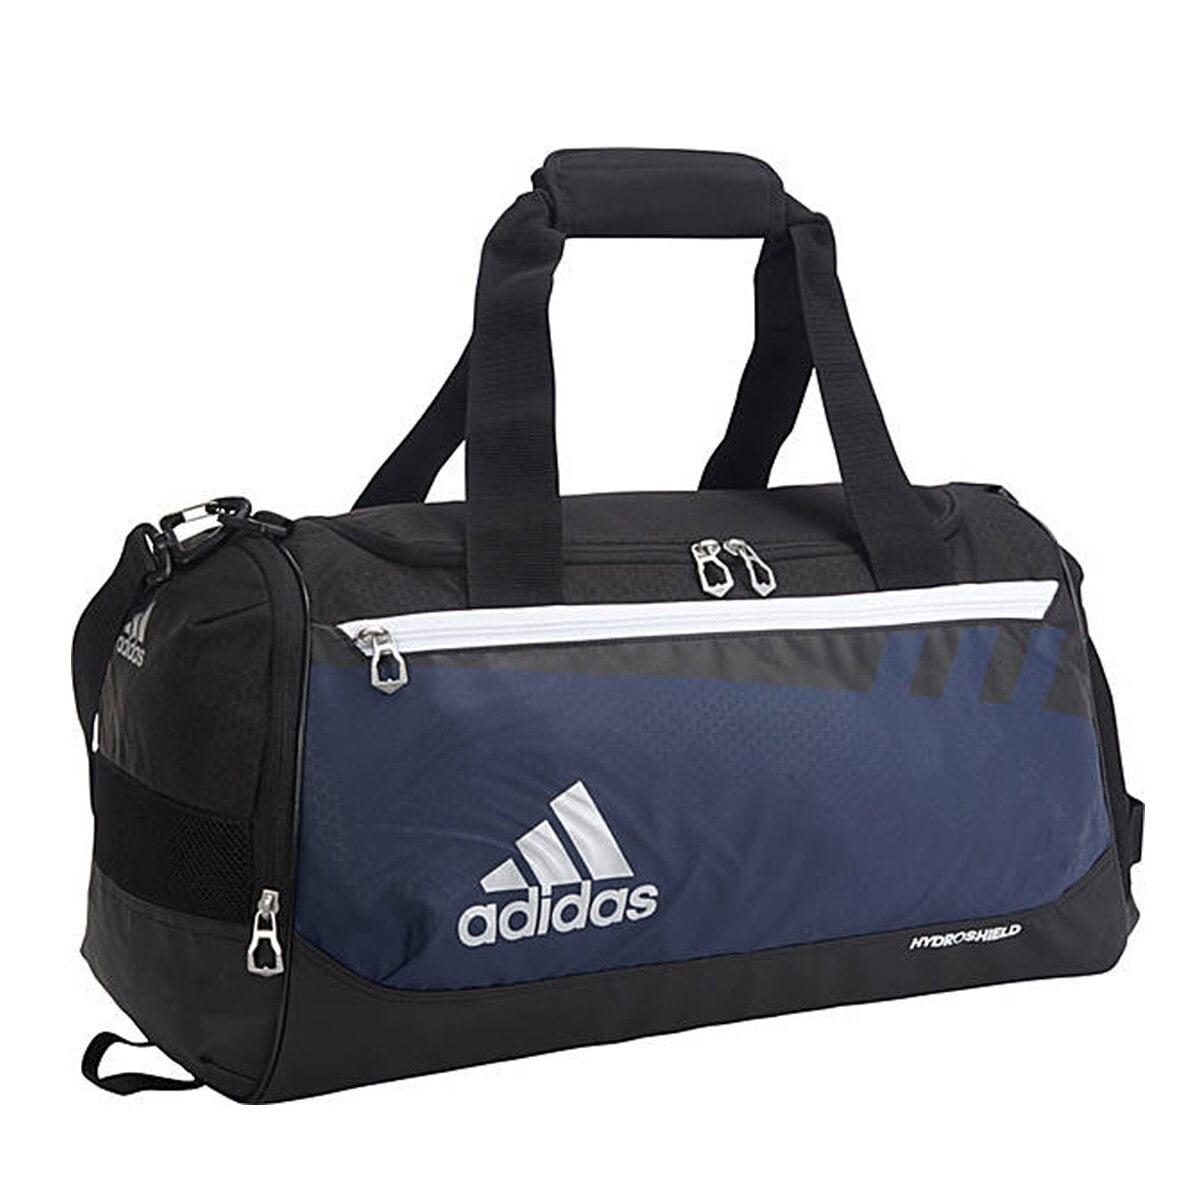 Buy adidas Team Issue Duffel Bag at Amazon.in